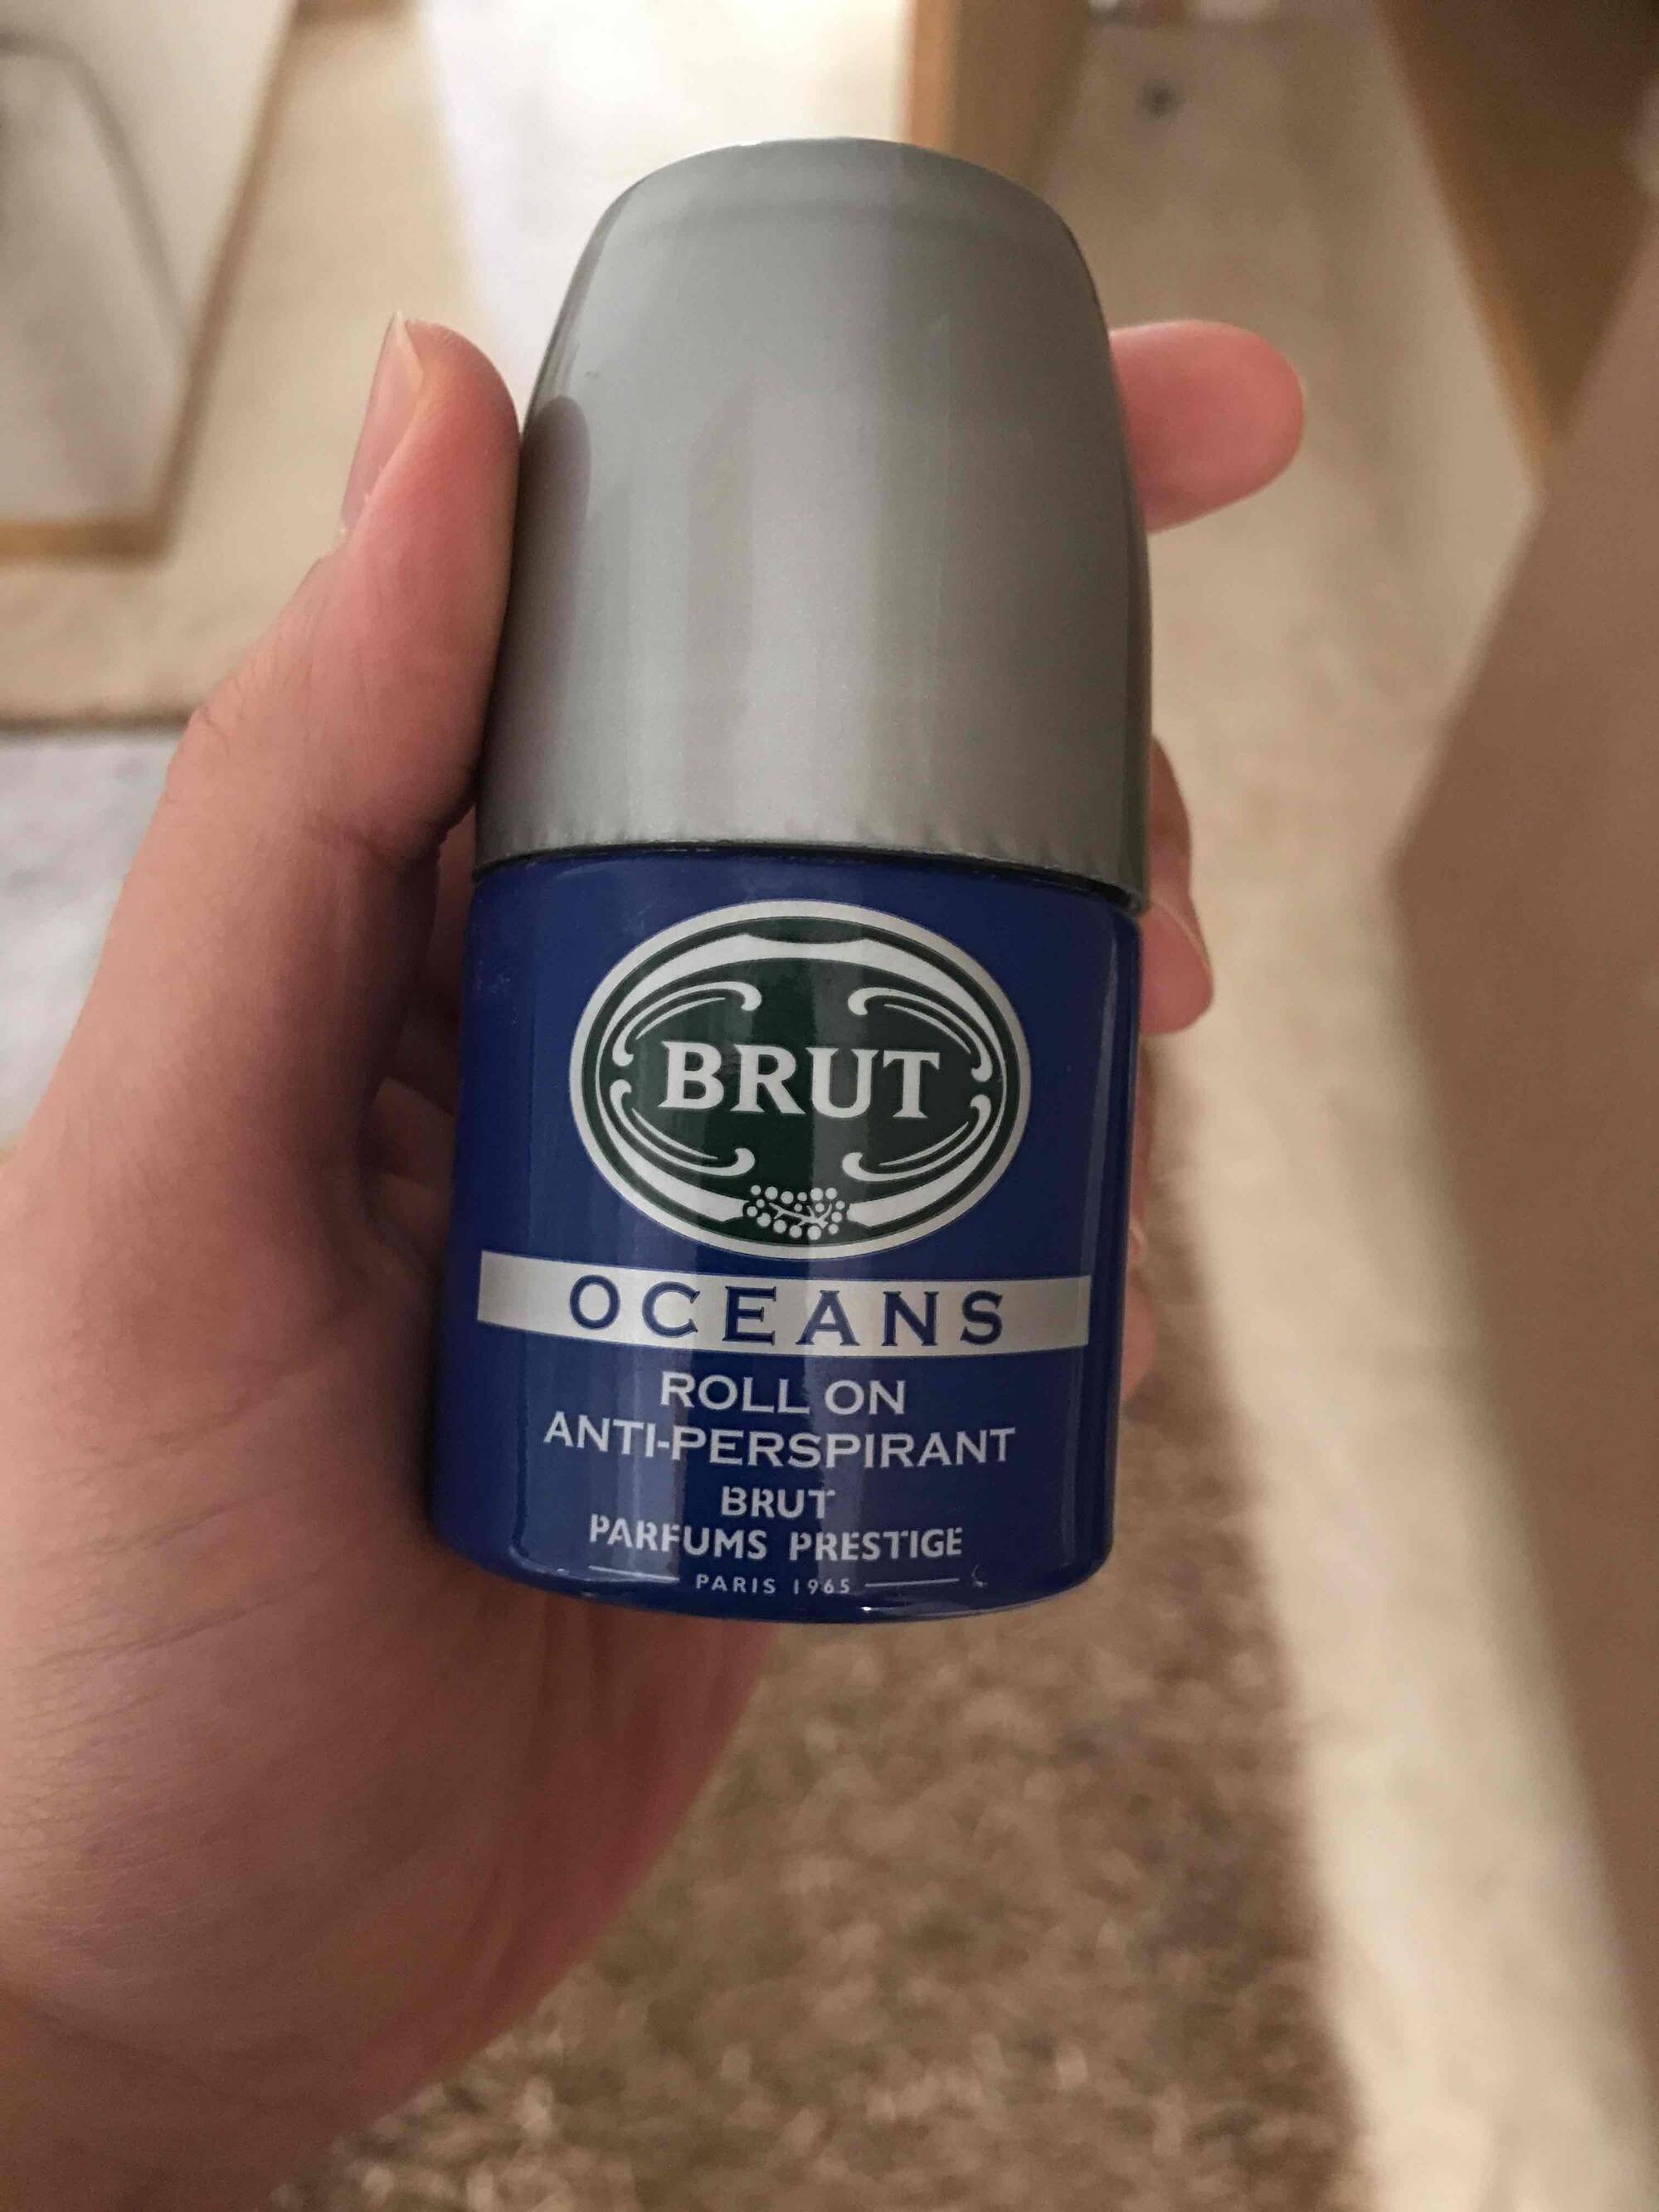 BRUT - Oceans roll on anti-perspirant